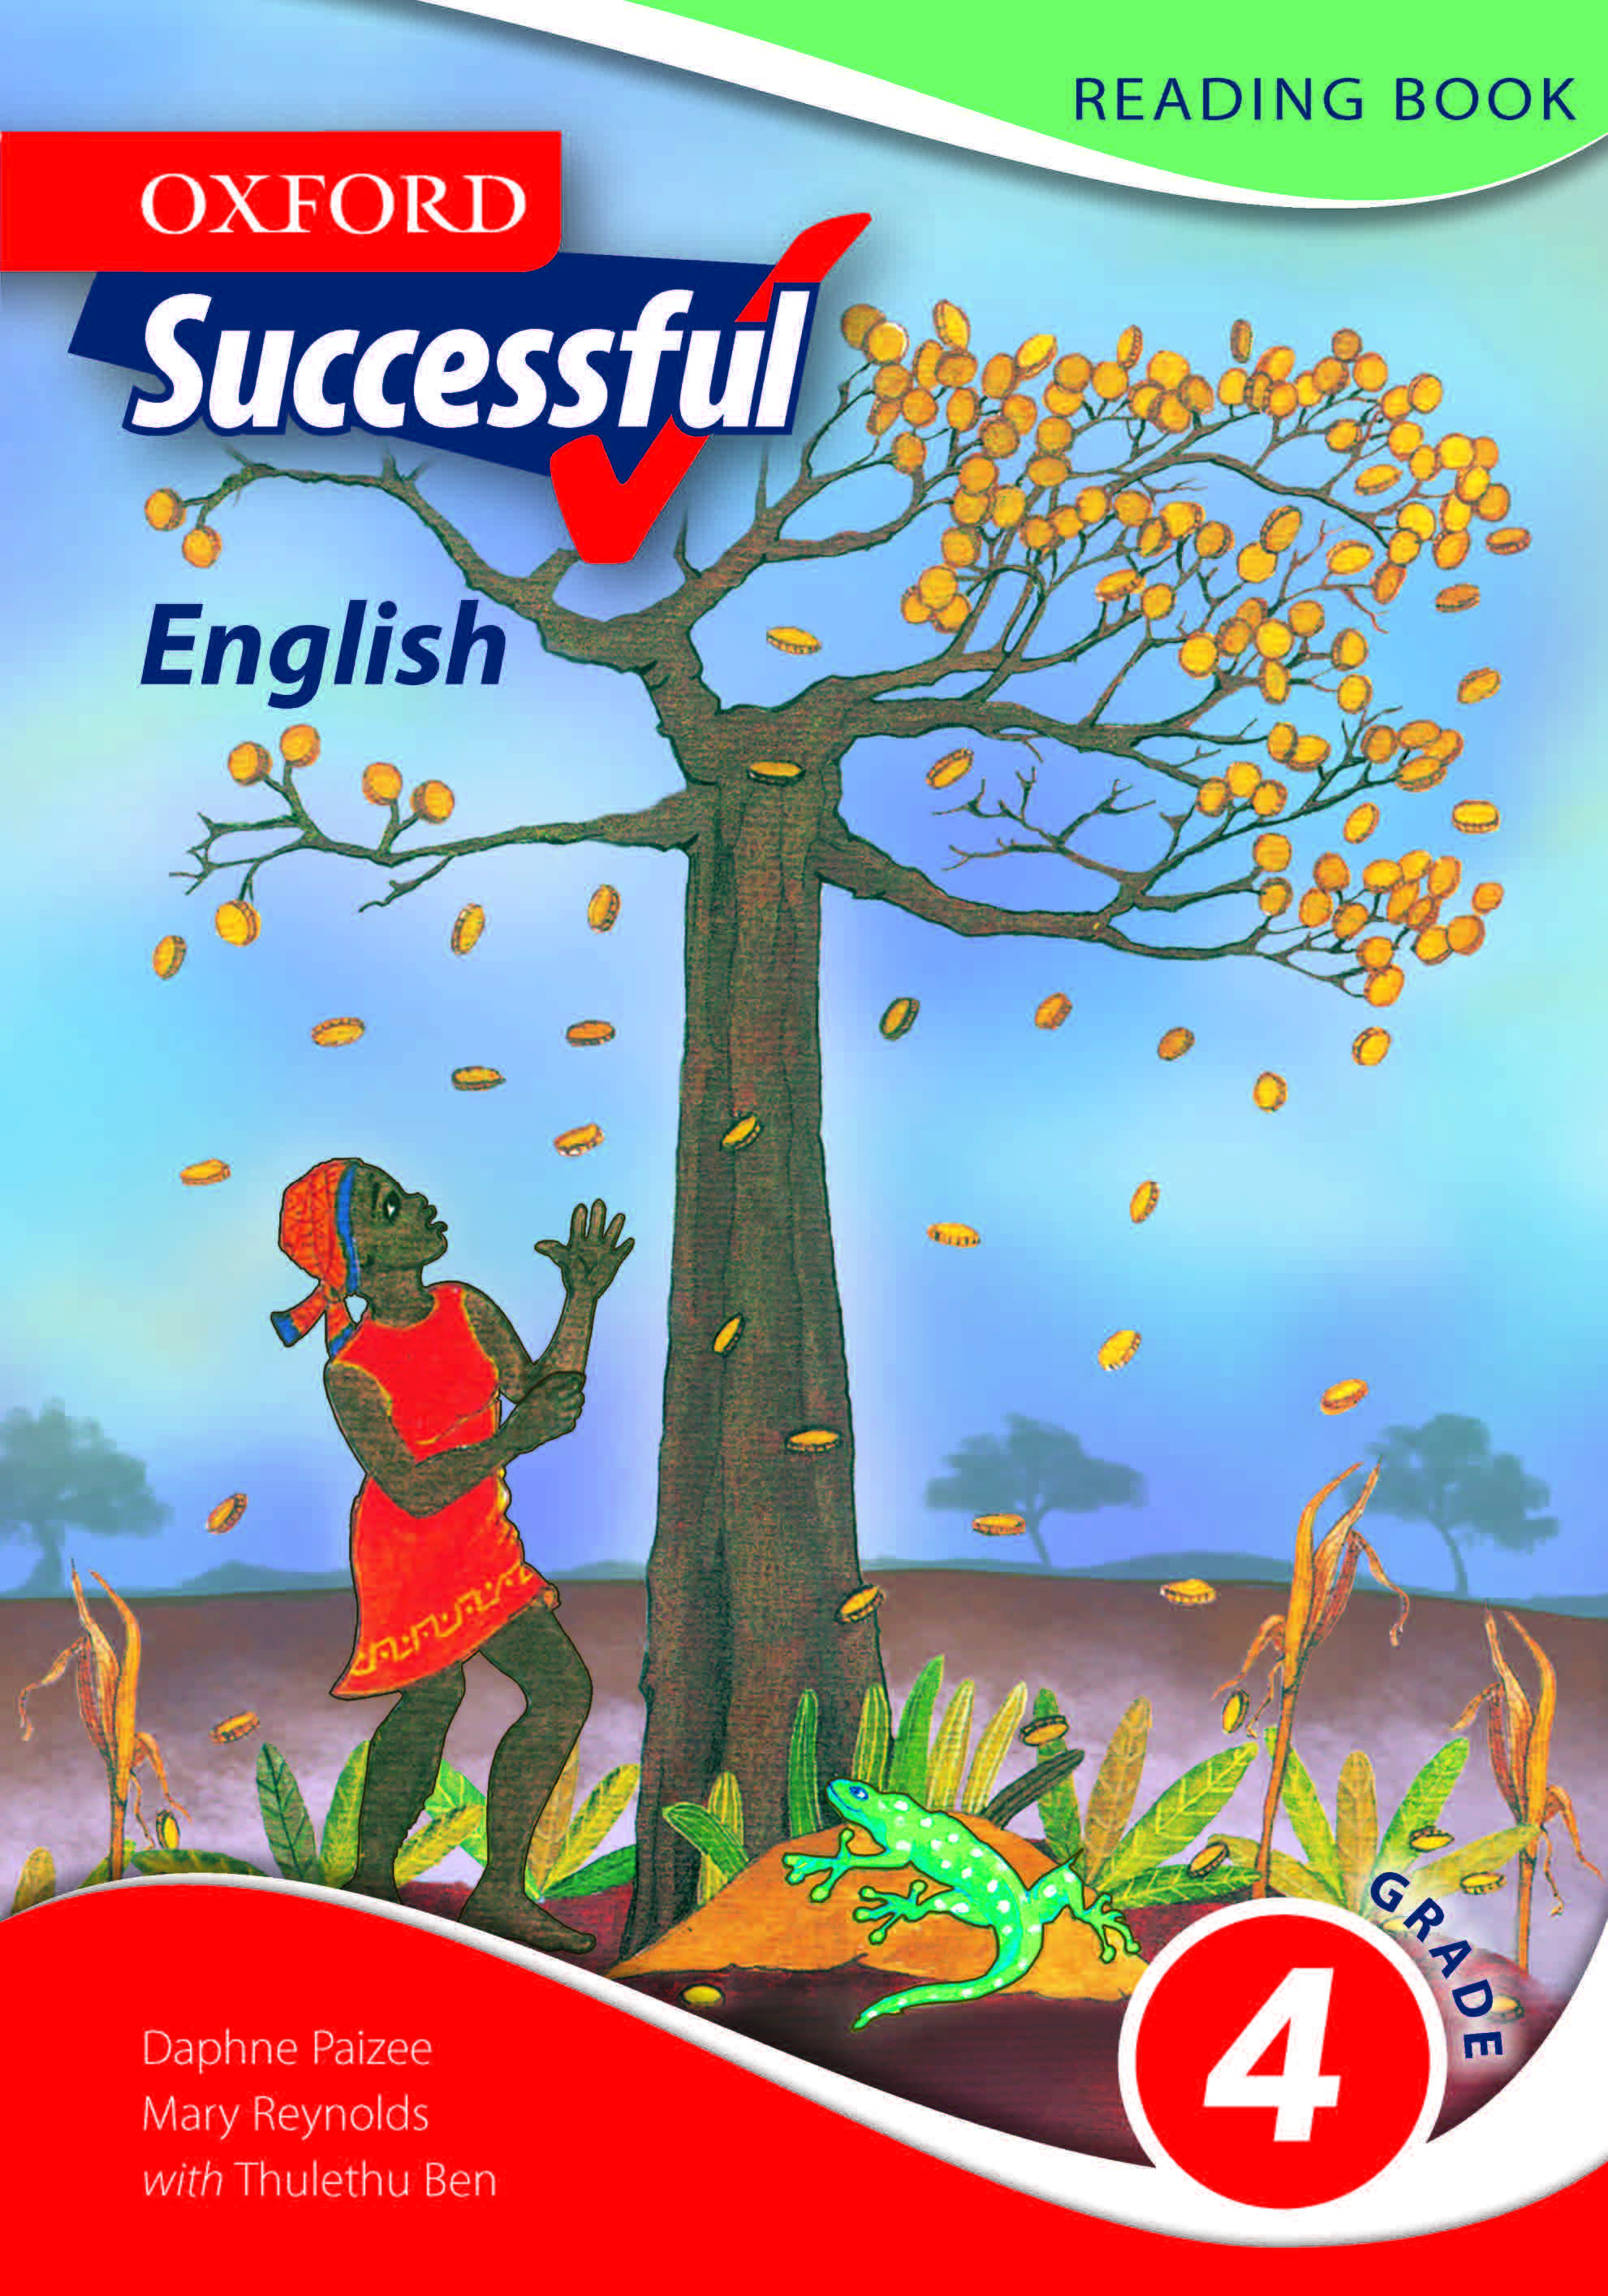 Oxford Successful English Grade 4 Reading Book | WCED ePortal